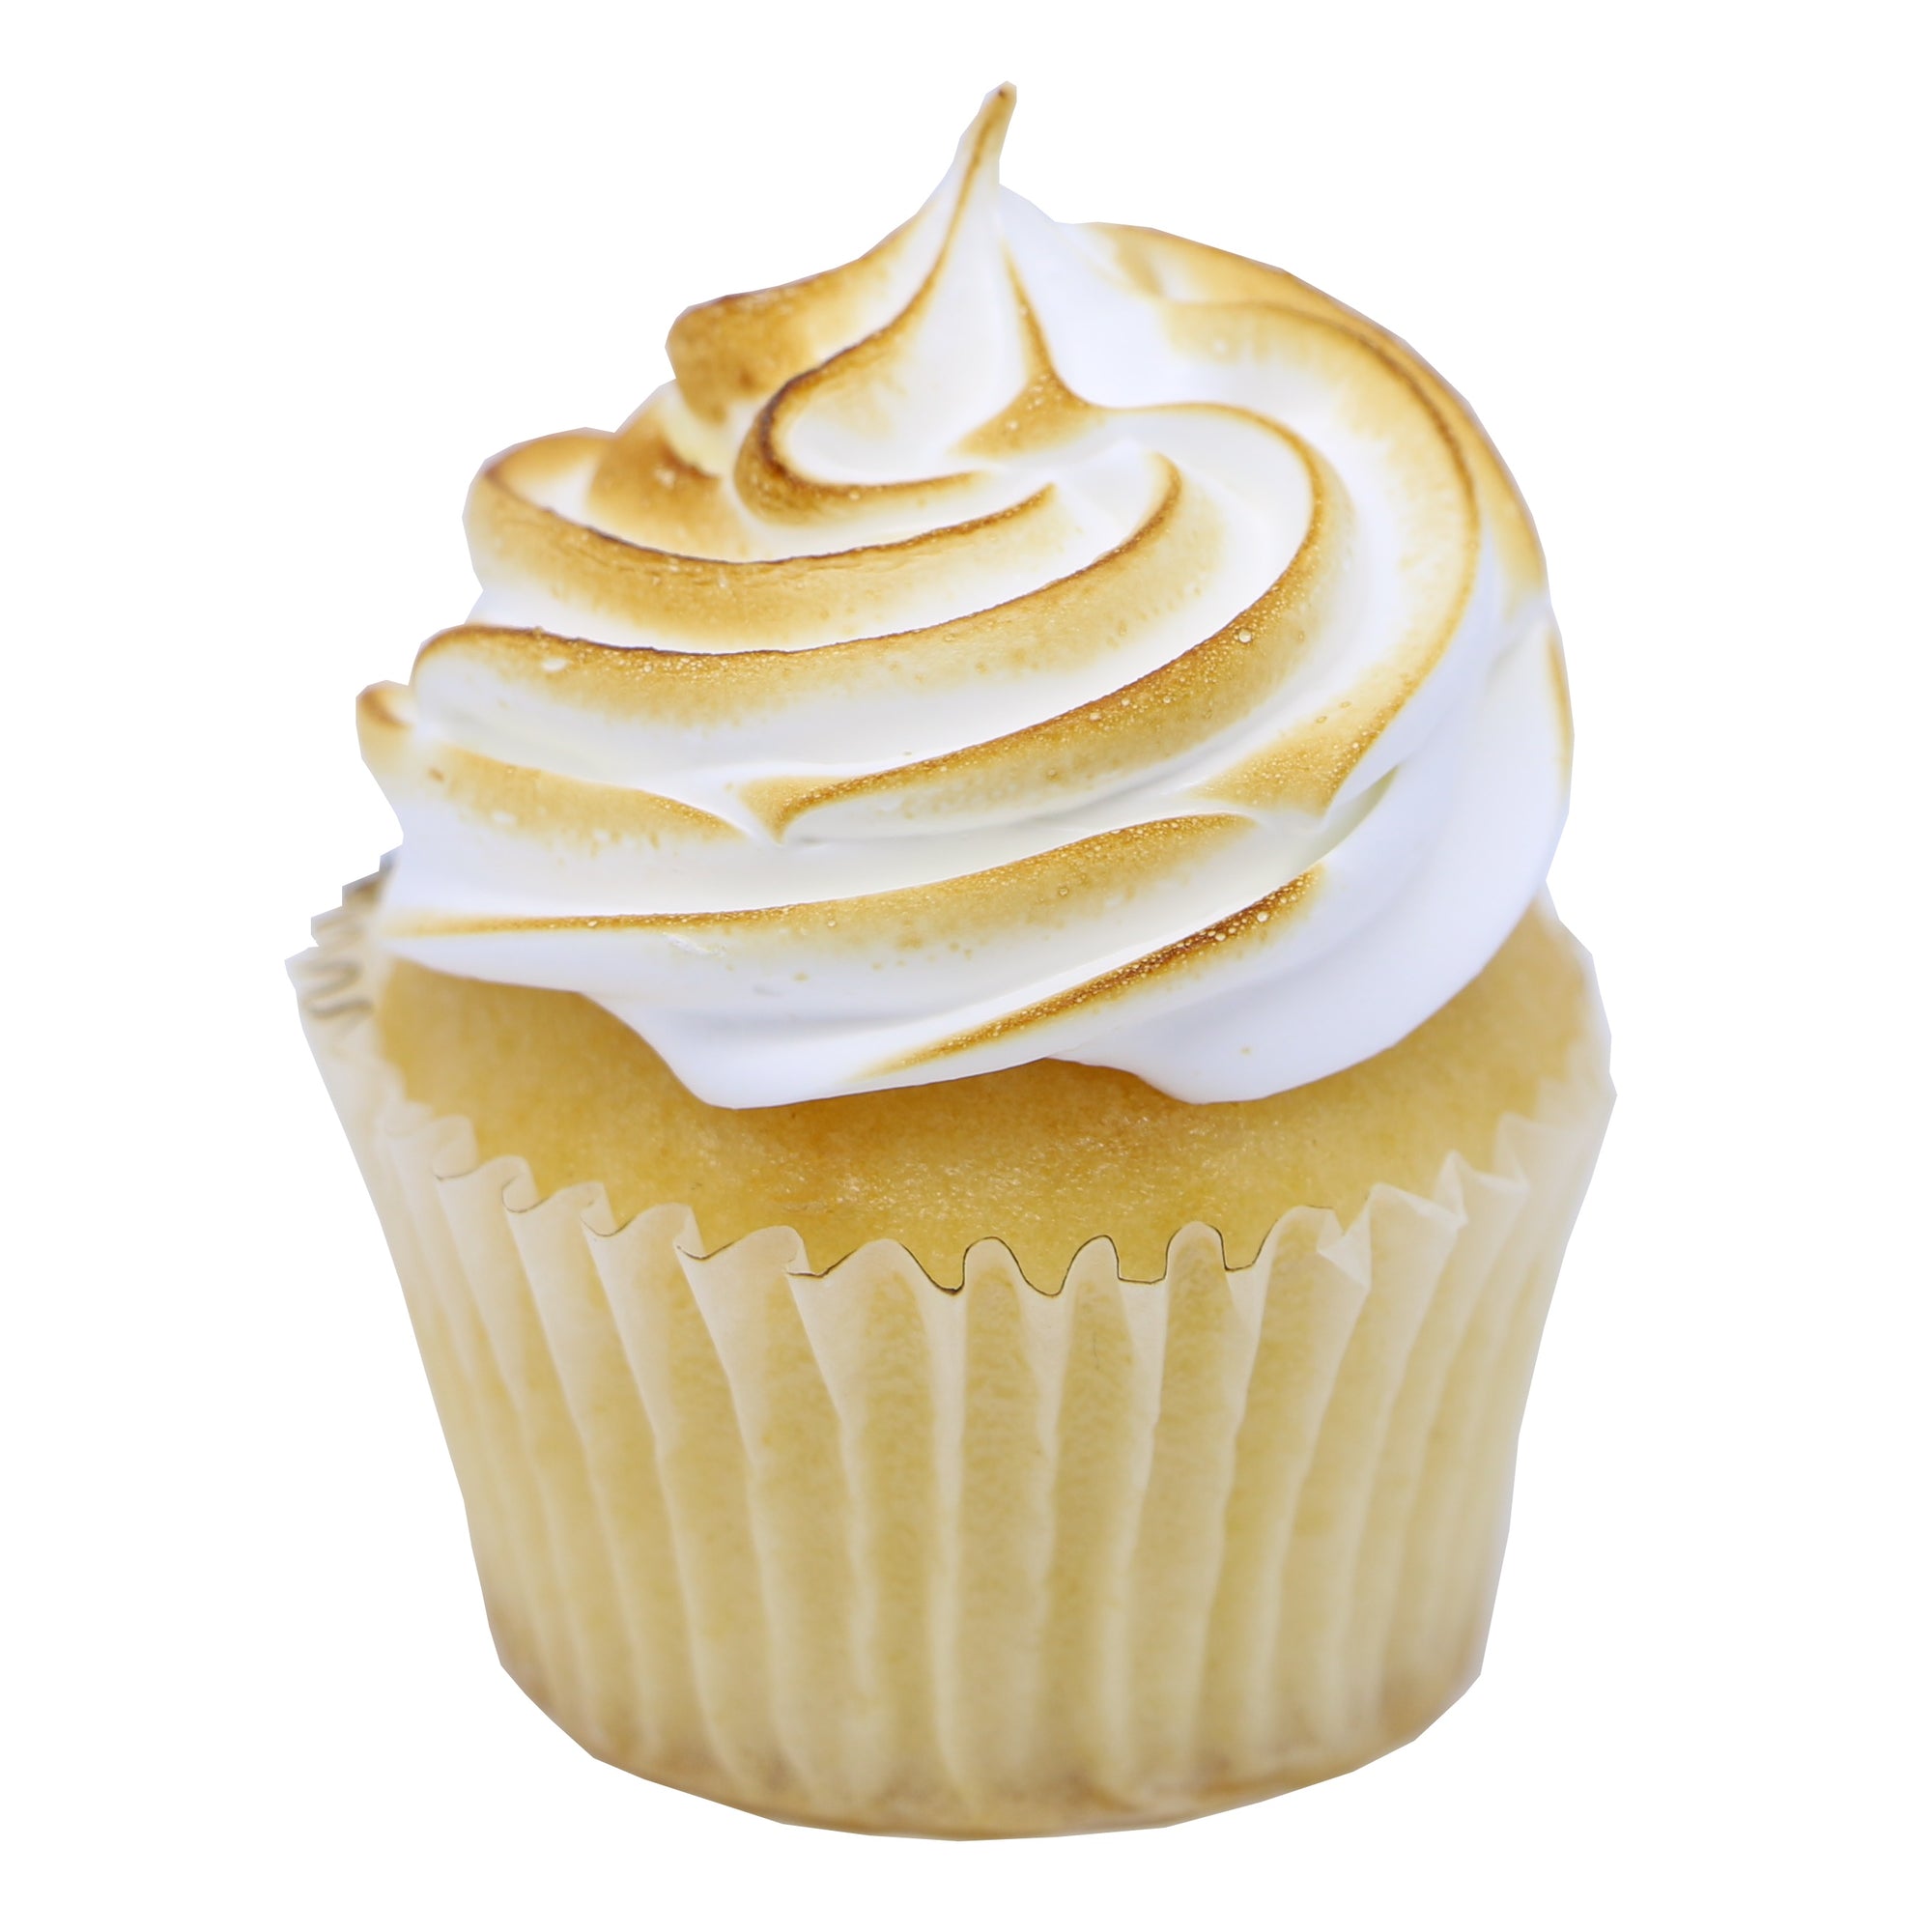 Mini Cupcake - Lemon Meringue - Treats2eat - Wedding & Birthday Party Dessert Catering Near Me